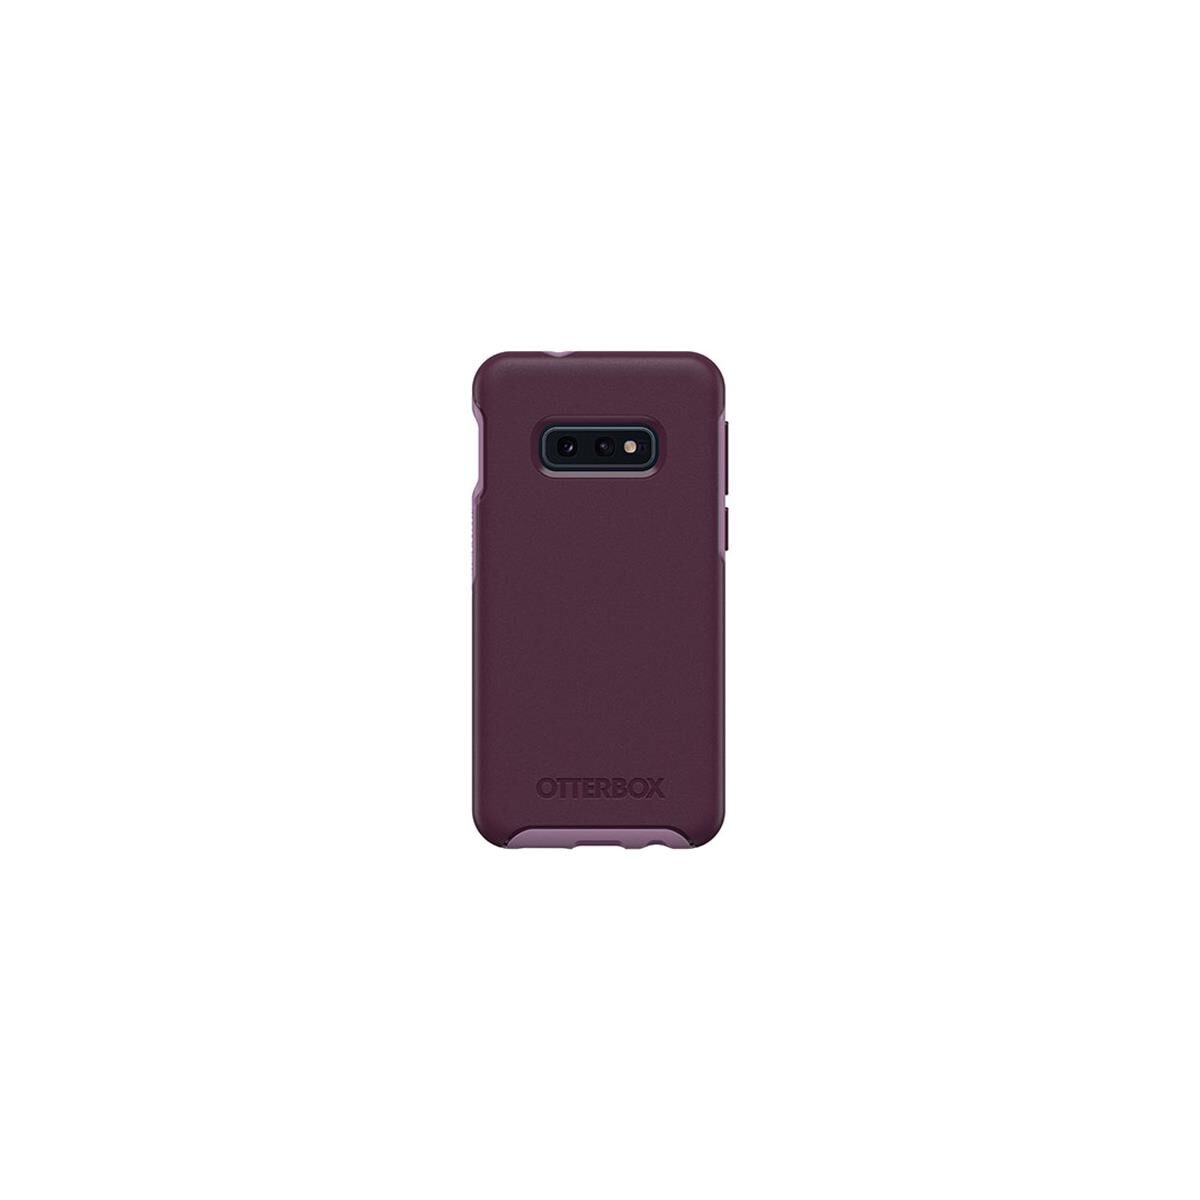 OtterBox Symmetry Case for Samsung Galaxy S10e Smartphone, Tonic Violet Purple